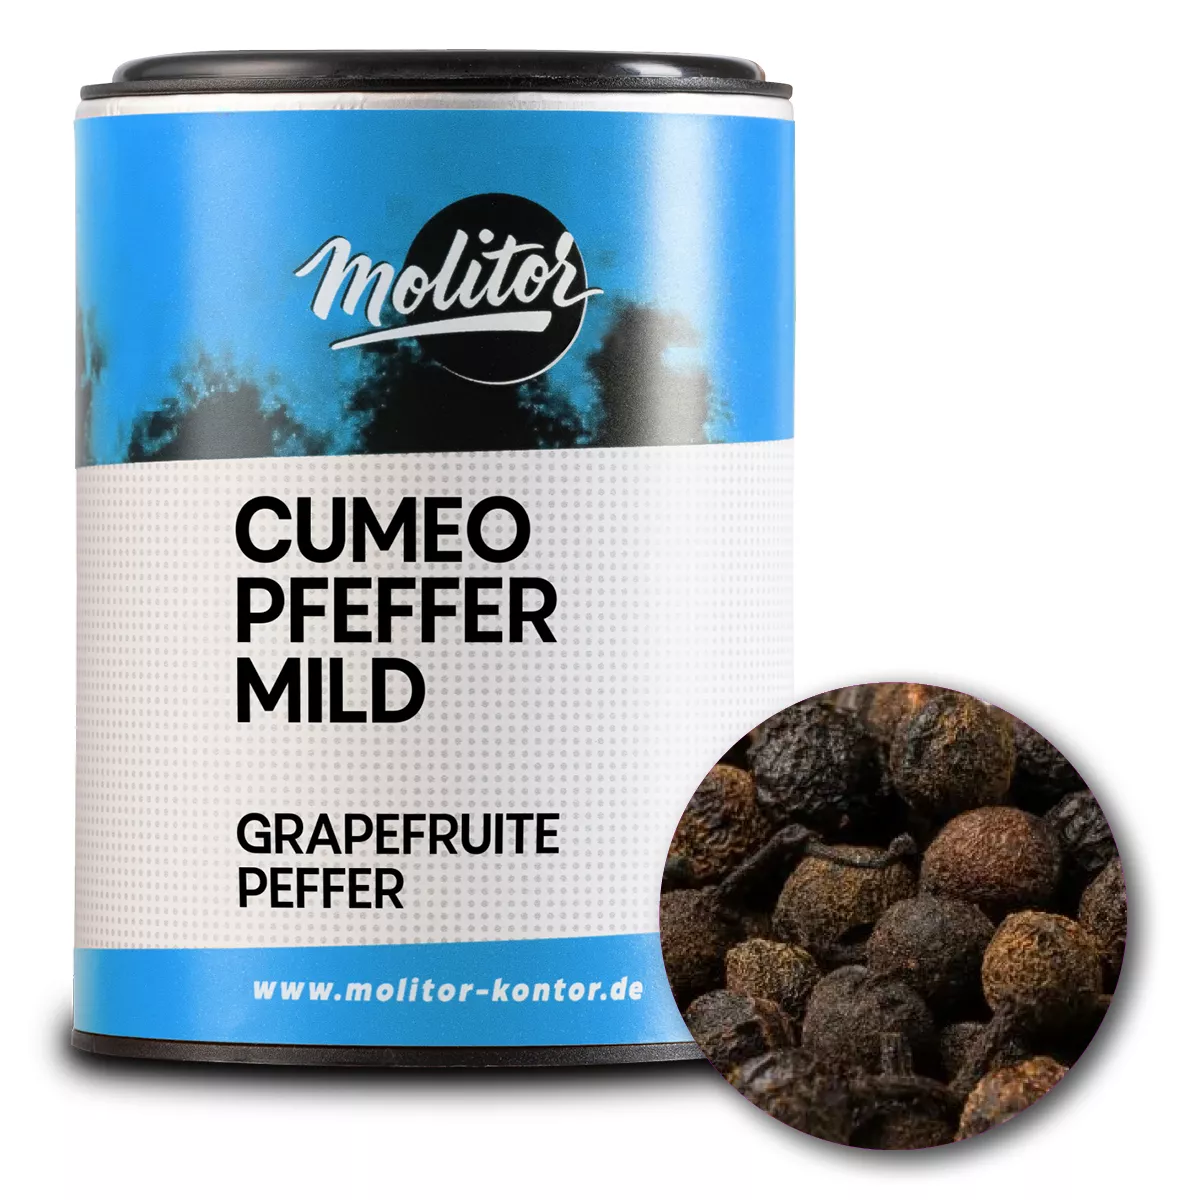 Cumeo Pfeffer | Grapefruit Pfeffer